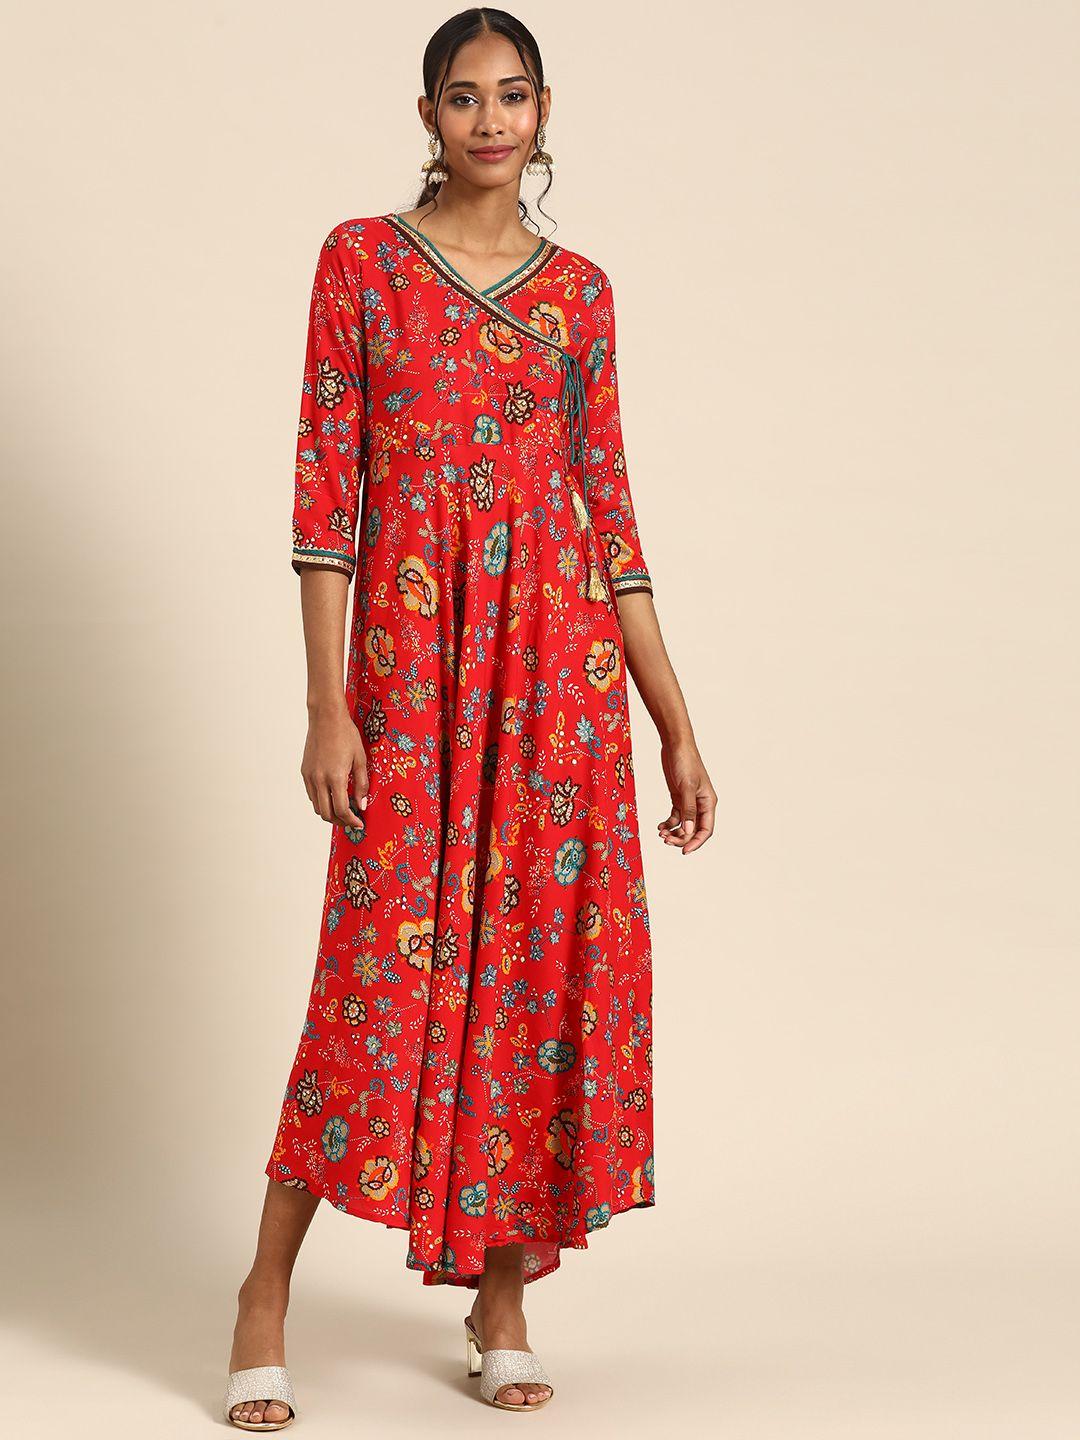 rangmayee red & blue floral liva ethnic a-line maxi dress